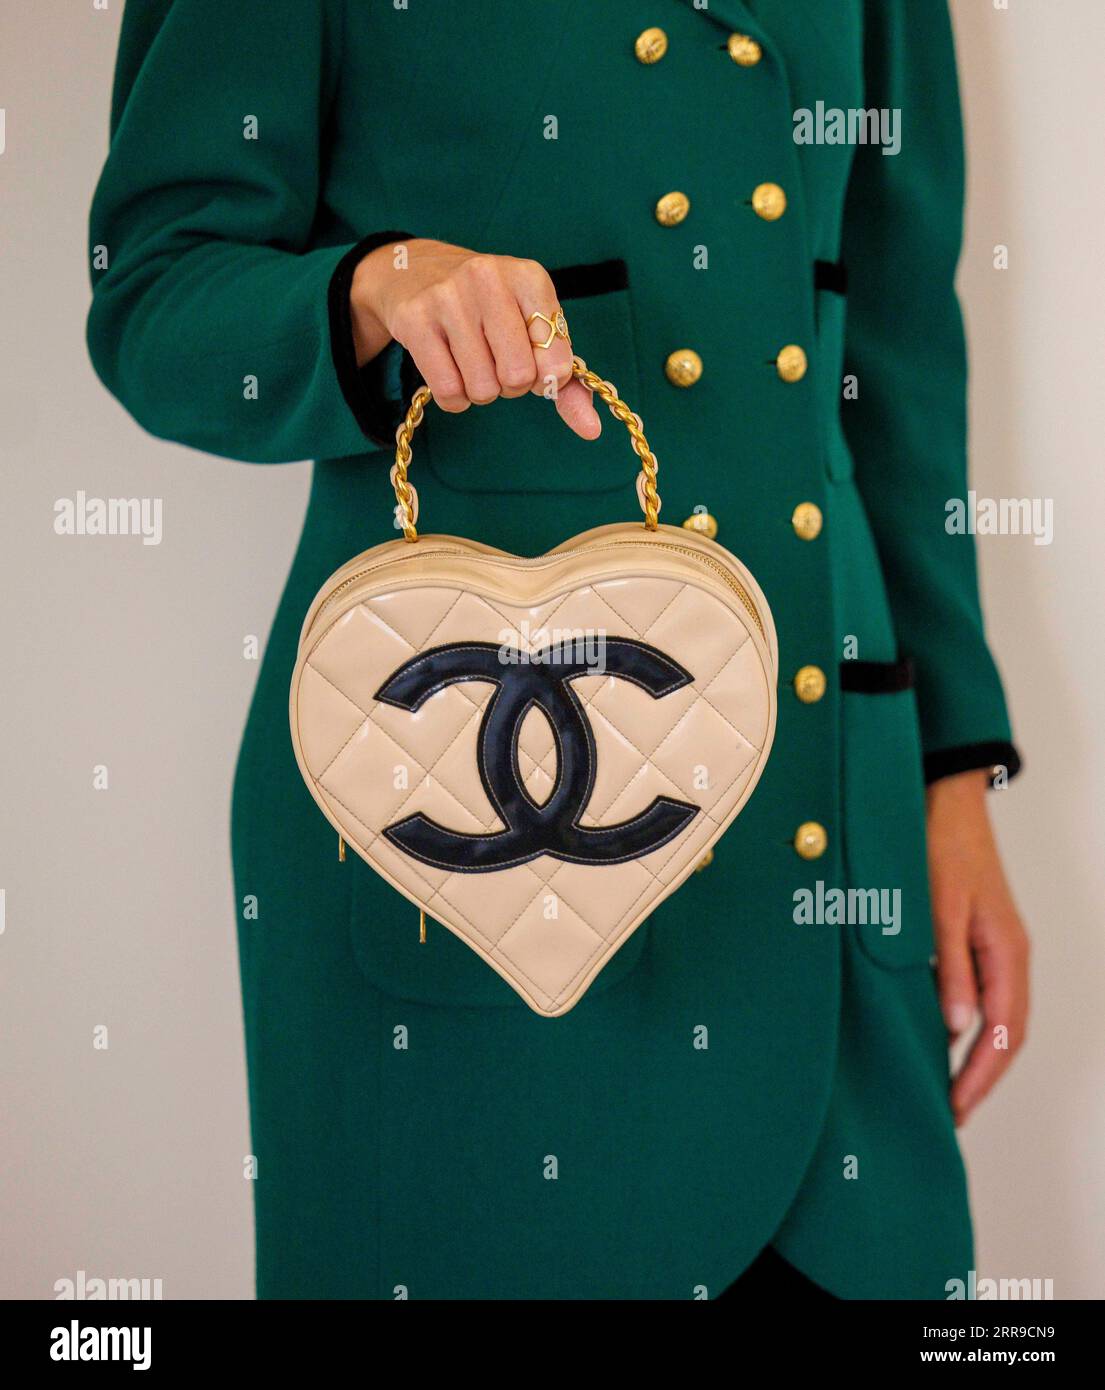 Chanel Classic Flap So Classic Jumbo Maxi Shoulder Bag